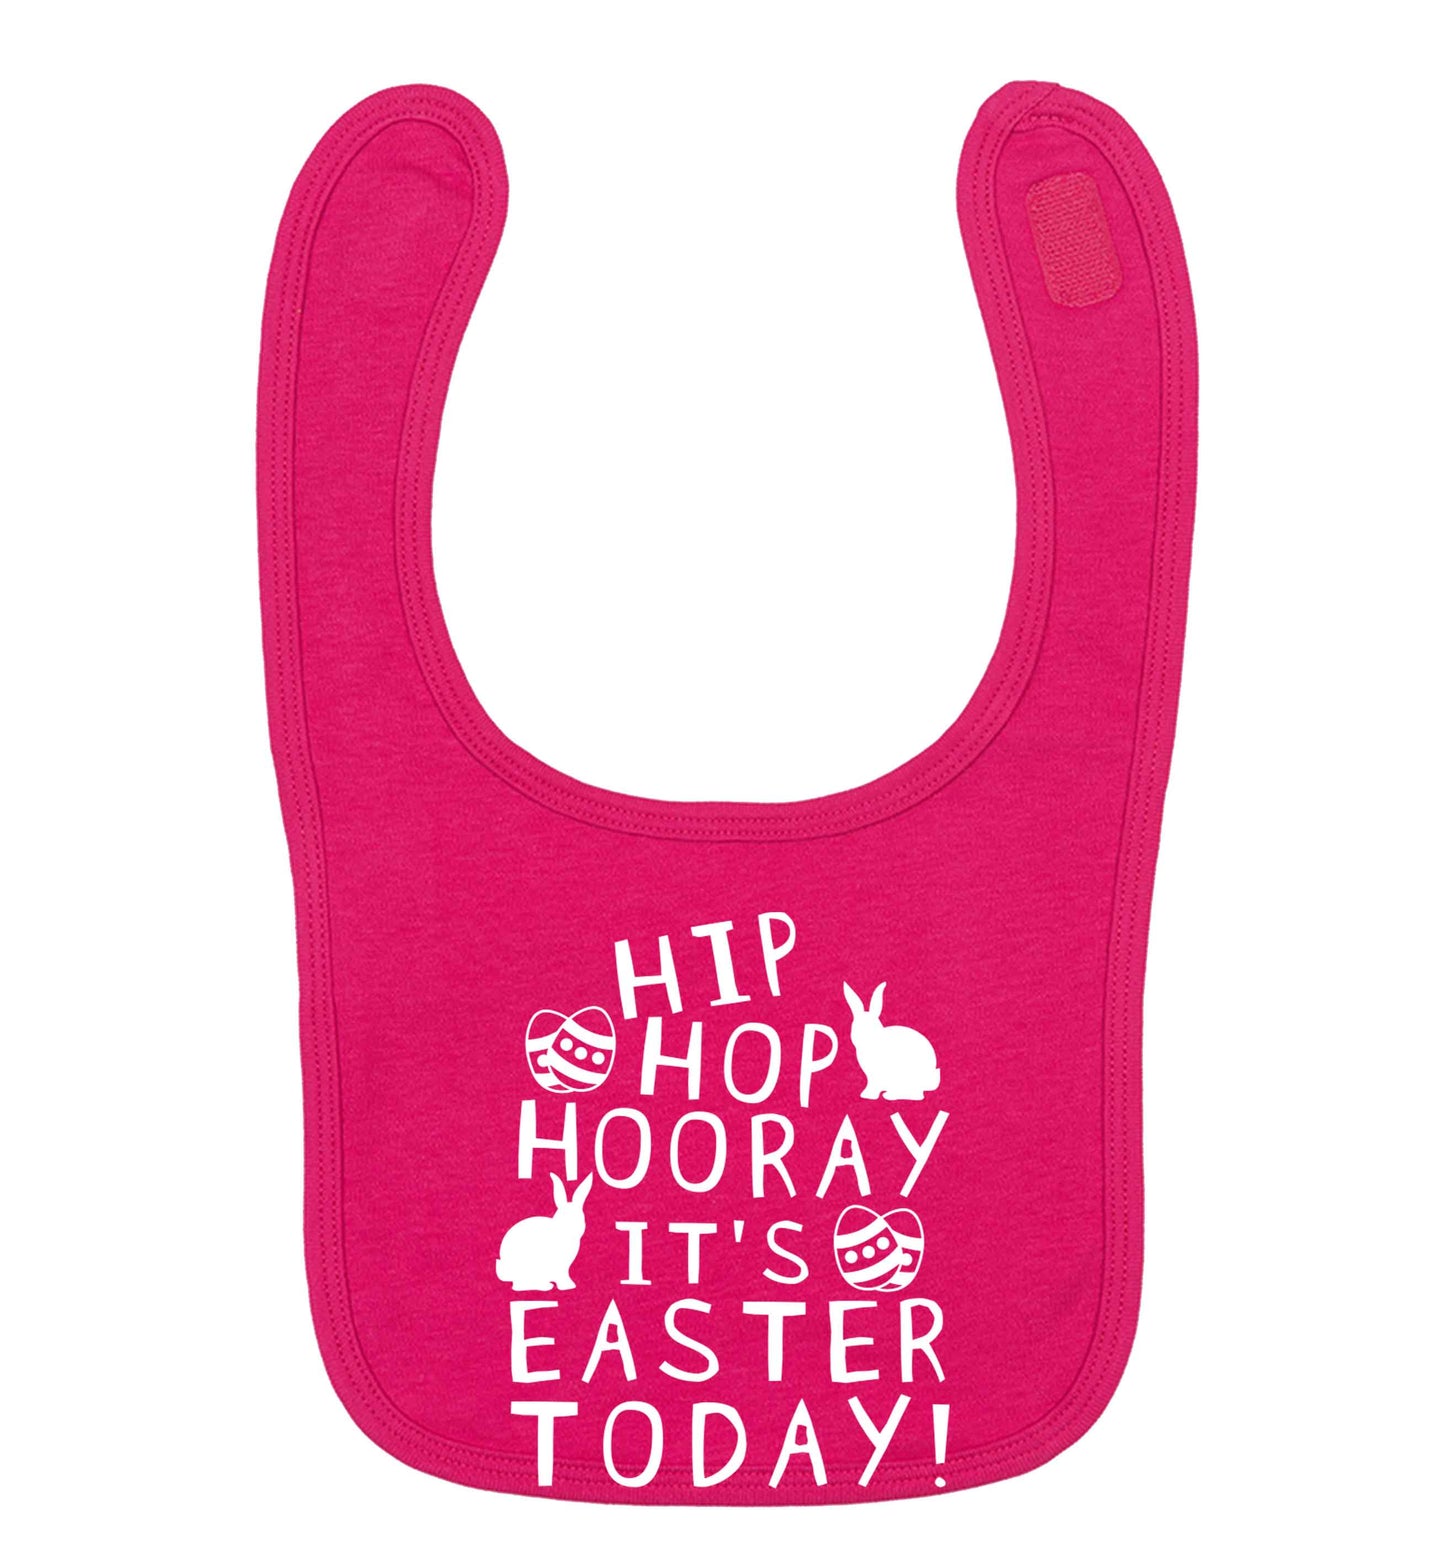 Hip hip hooray it's Easter today! dark pink baby bib